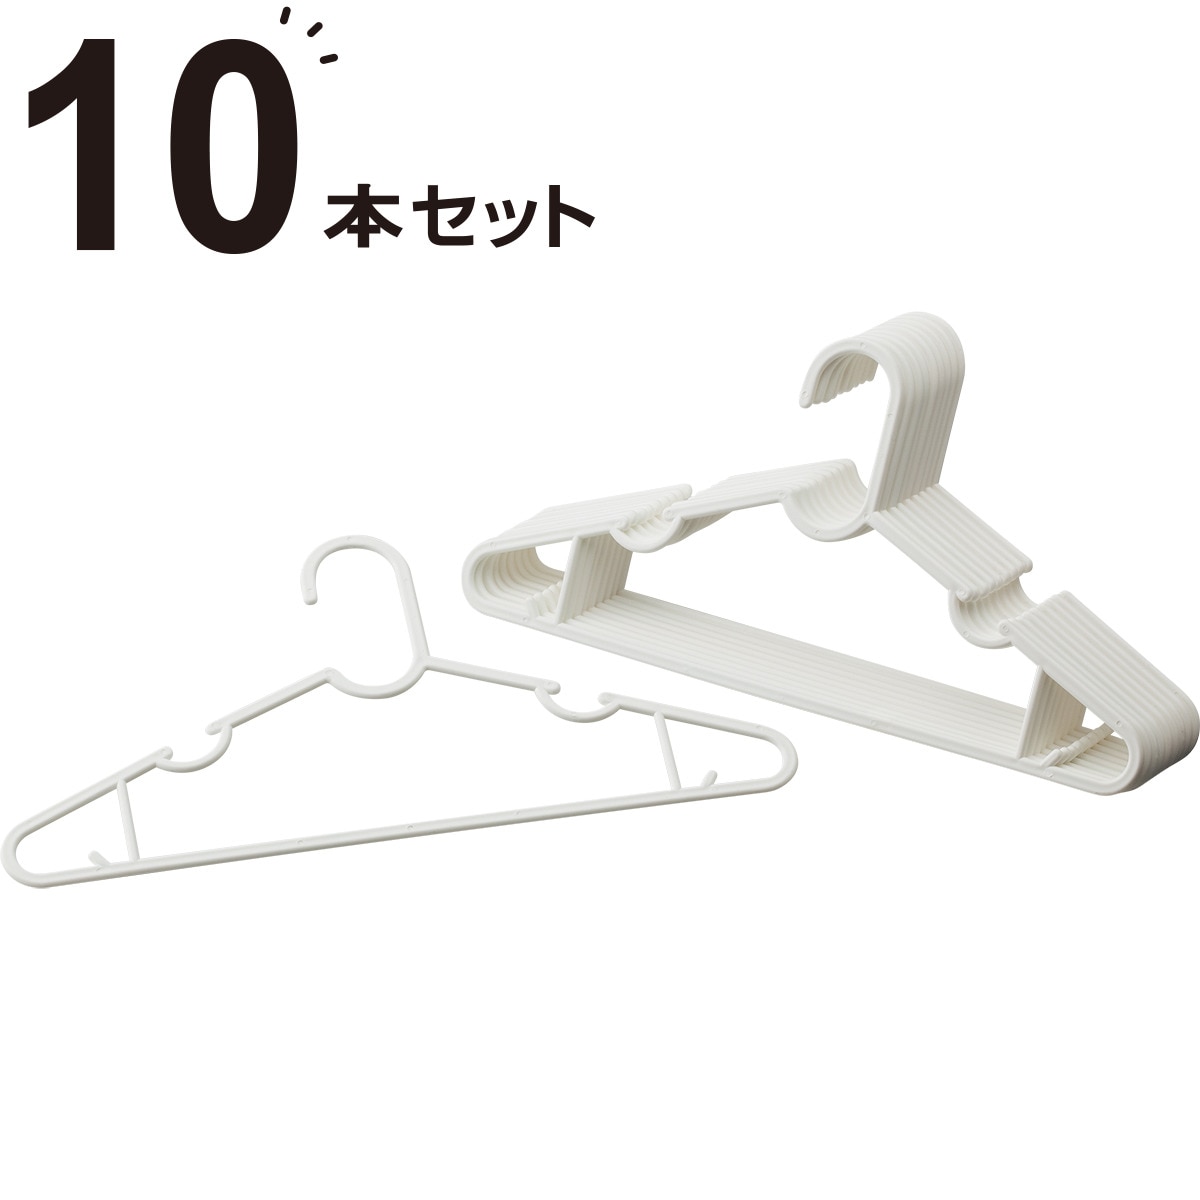 www.nitori-net.jp/ecstatic/image/product/8502077/8...